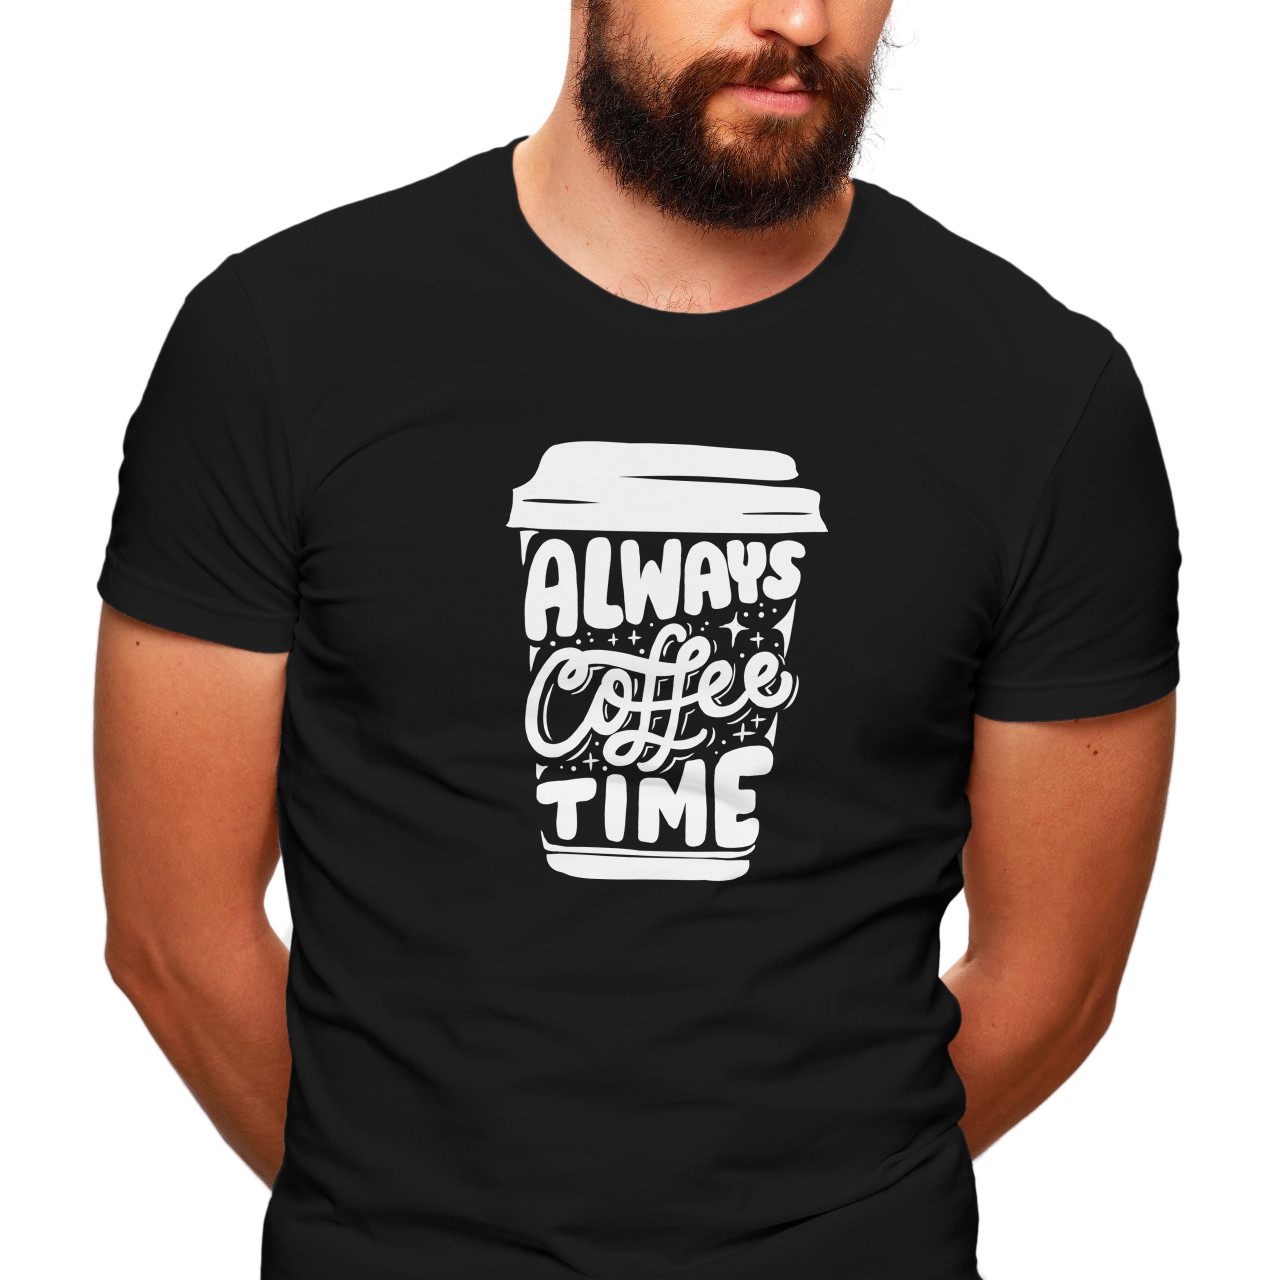 Pánské tričko s potiskem “Always Coffee Time”